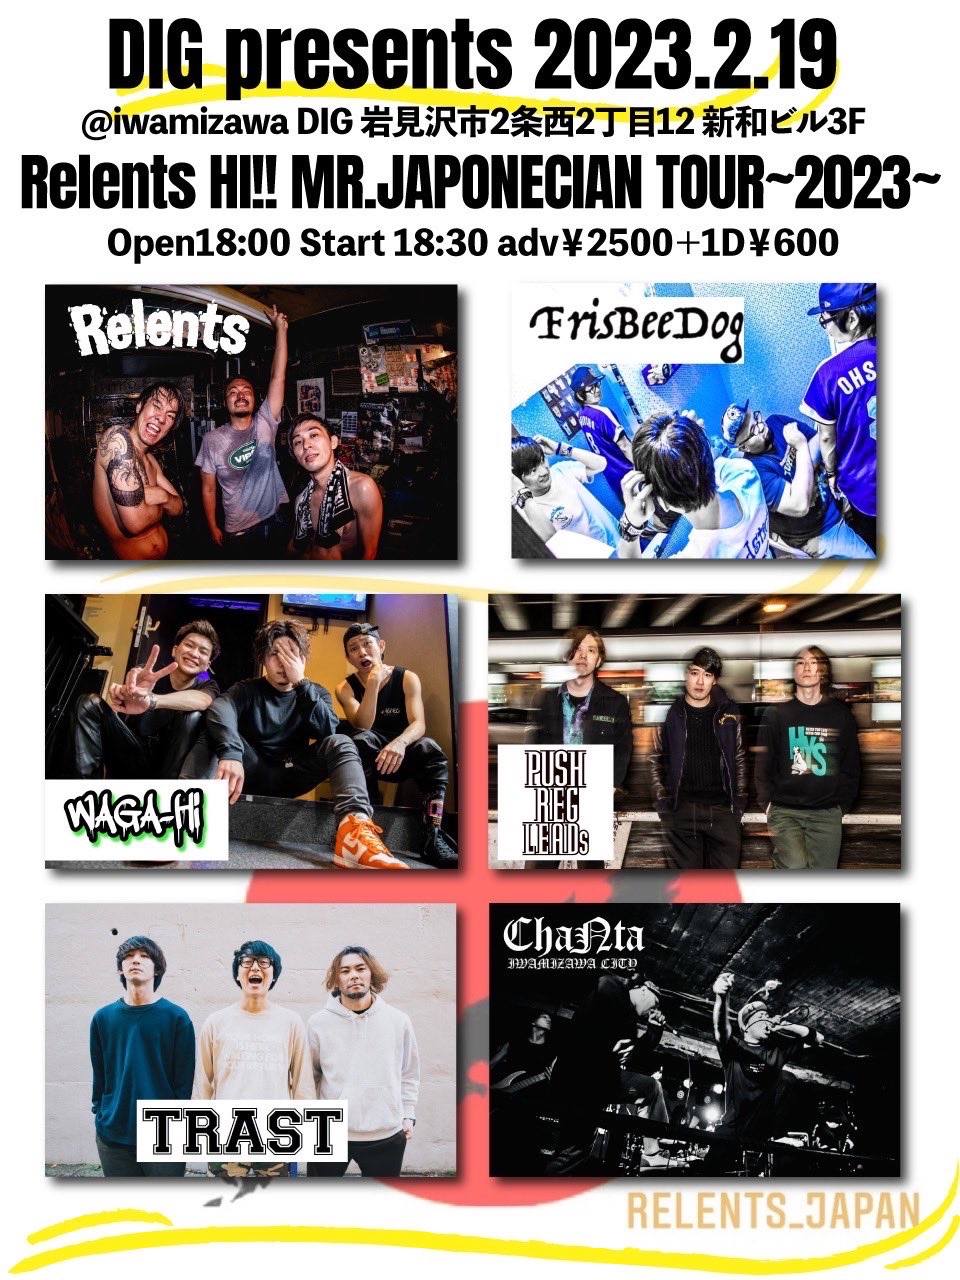 Relents “HI!! MR.JAPONECIAN TOUR 2023”